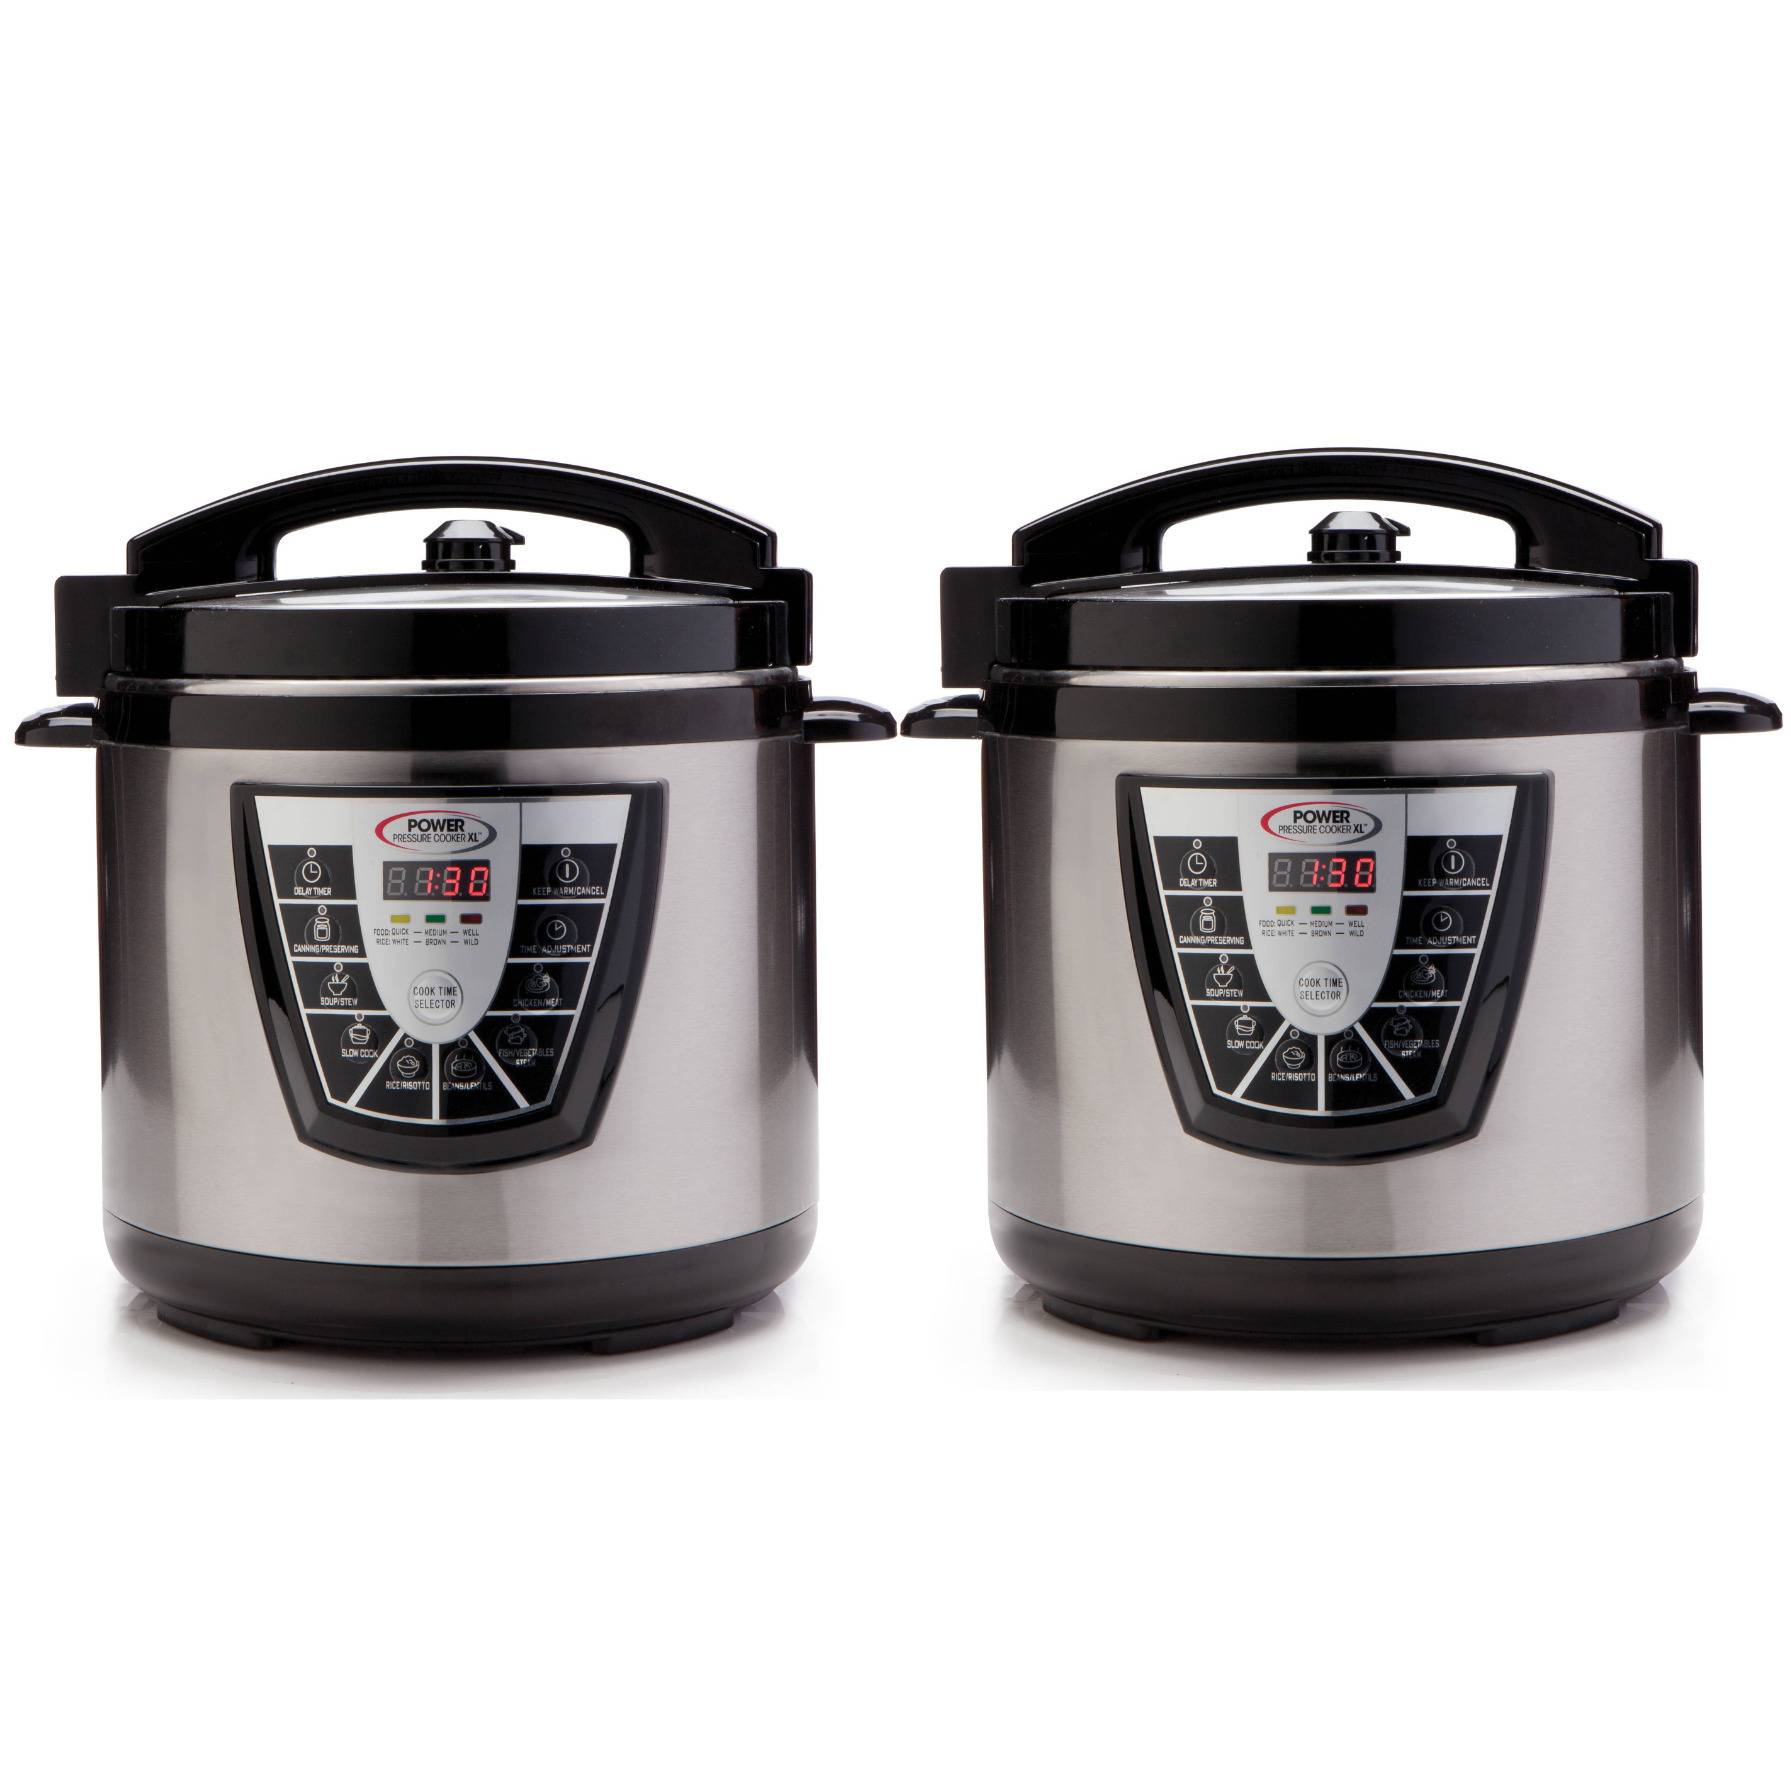 Power Pressure Cooker XL (6-Quart, Silver) (2 Pack)